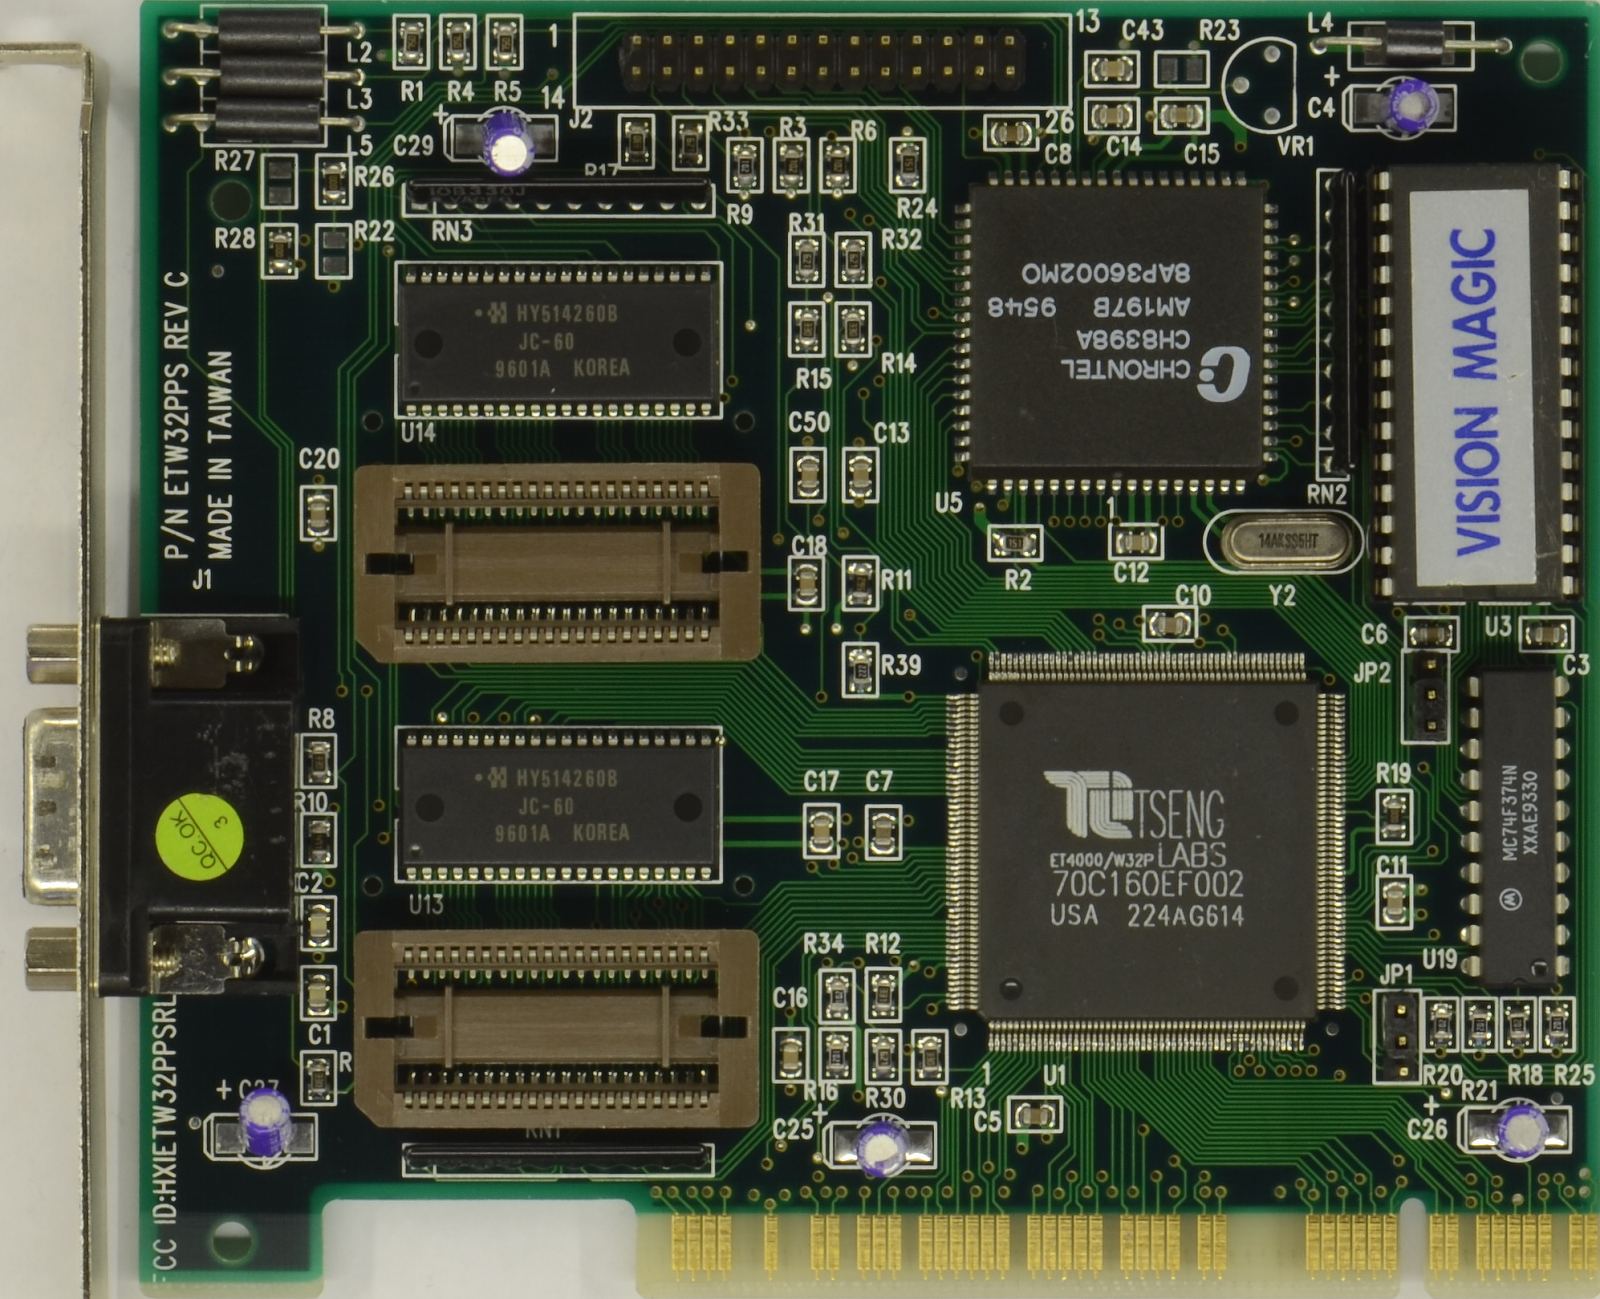 Tseng Labs ET4000/W32P SVGA graphics controller chip 